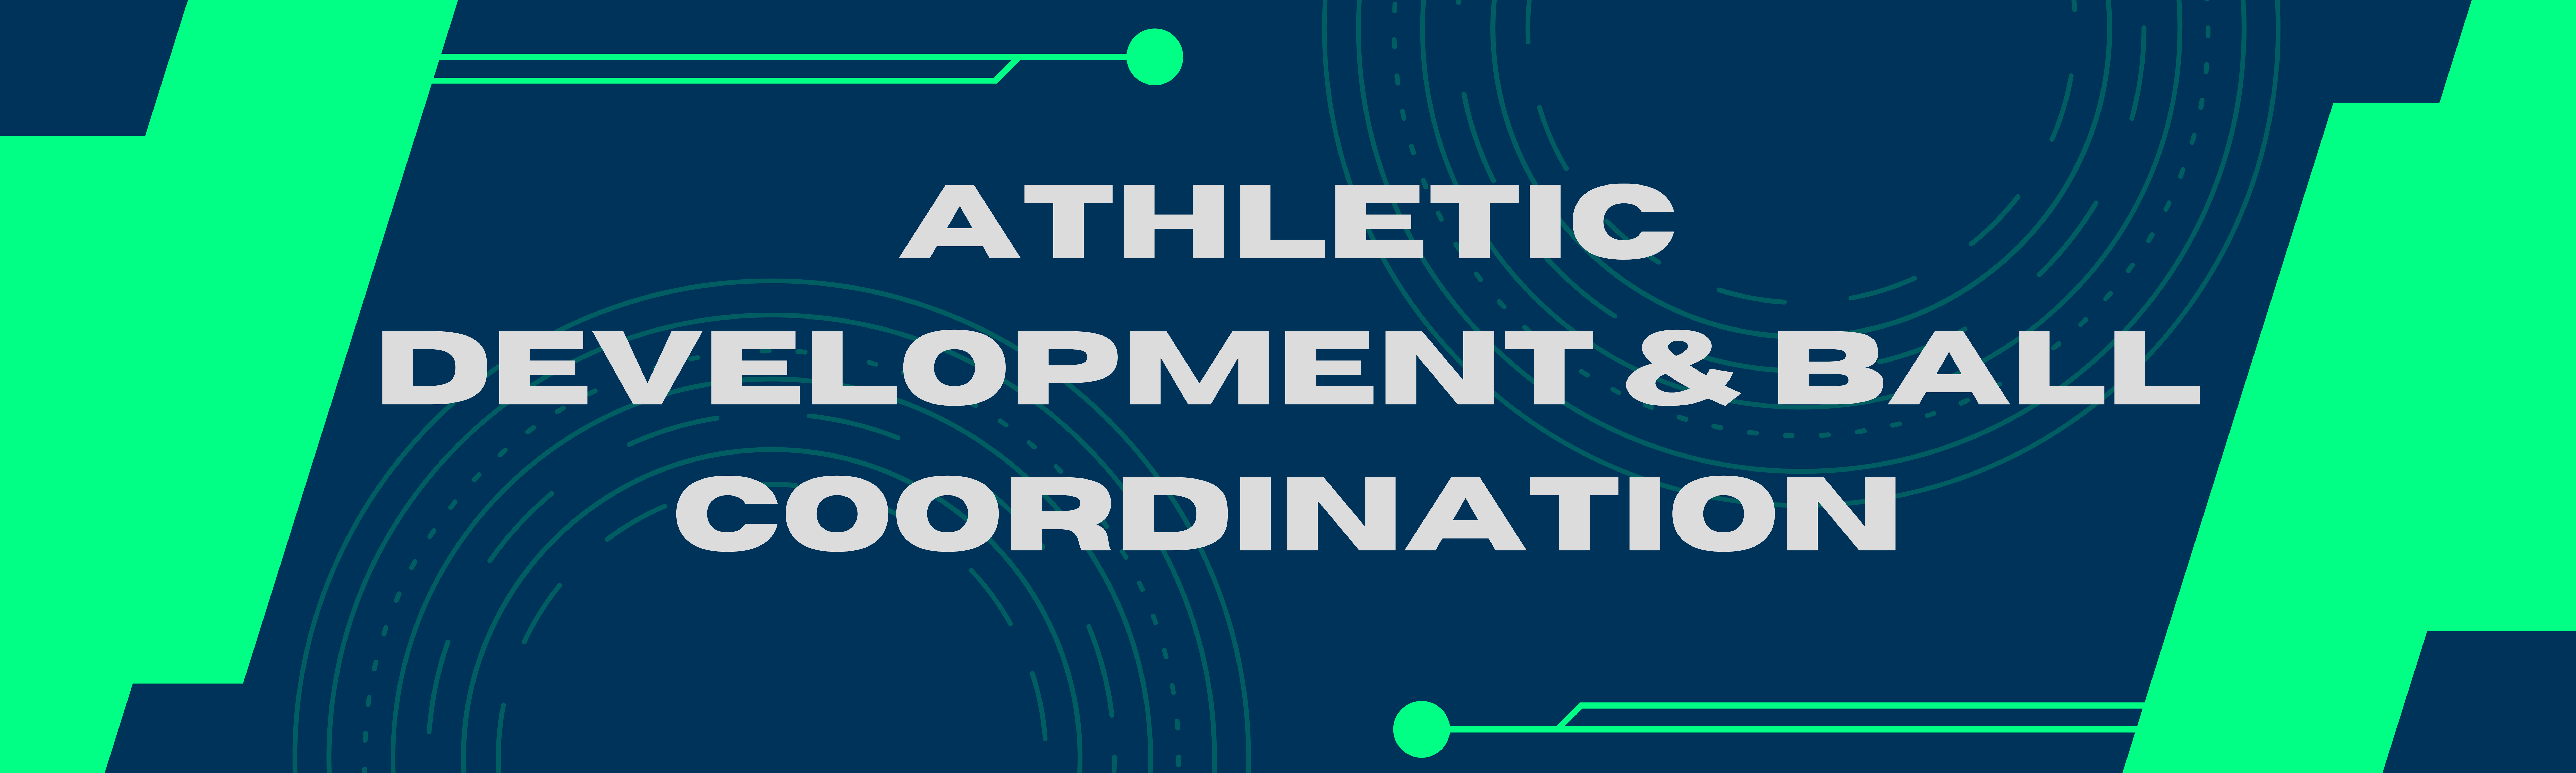 Athletic Development & Ball Coordination